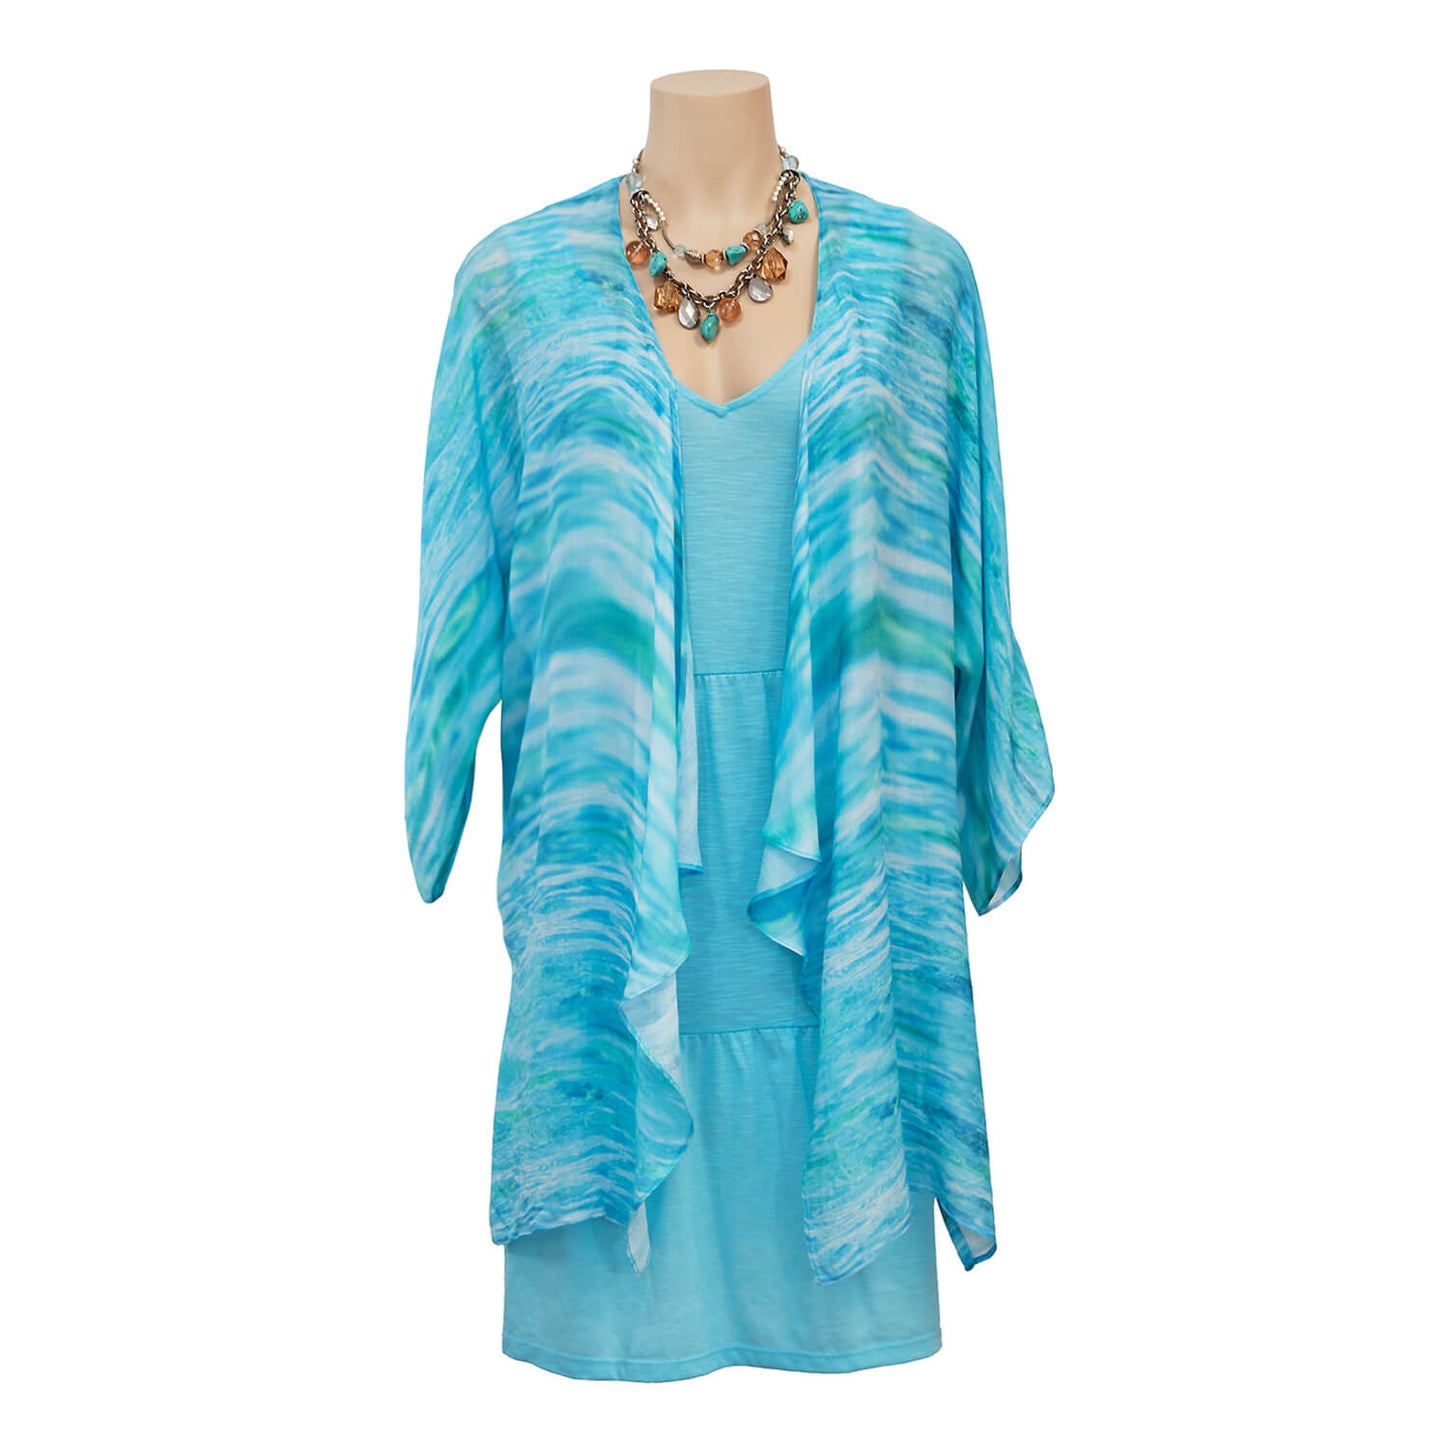 florida waterfall jacket over aqua blue dress by seahorse silks australia